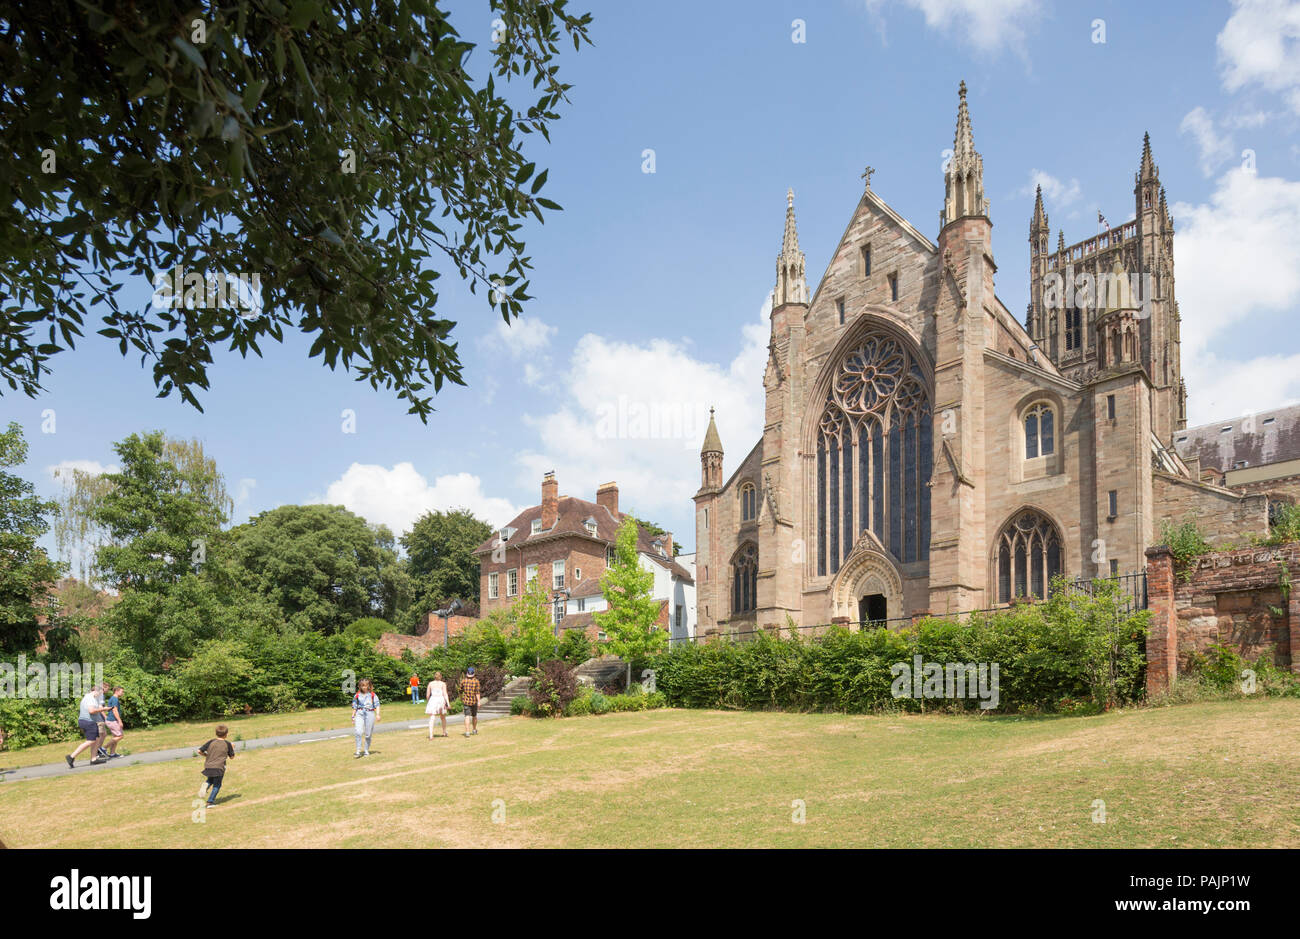 La Cathédrale de Worcester, Worcester, Worcestershire, Angleterre, RU Banque D'Images